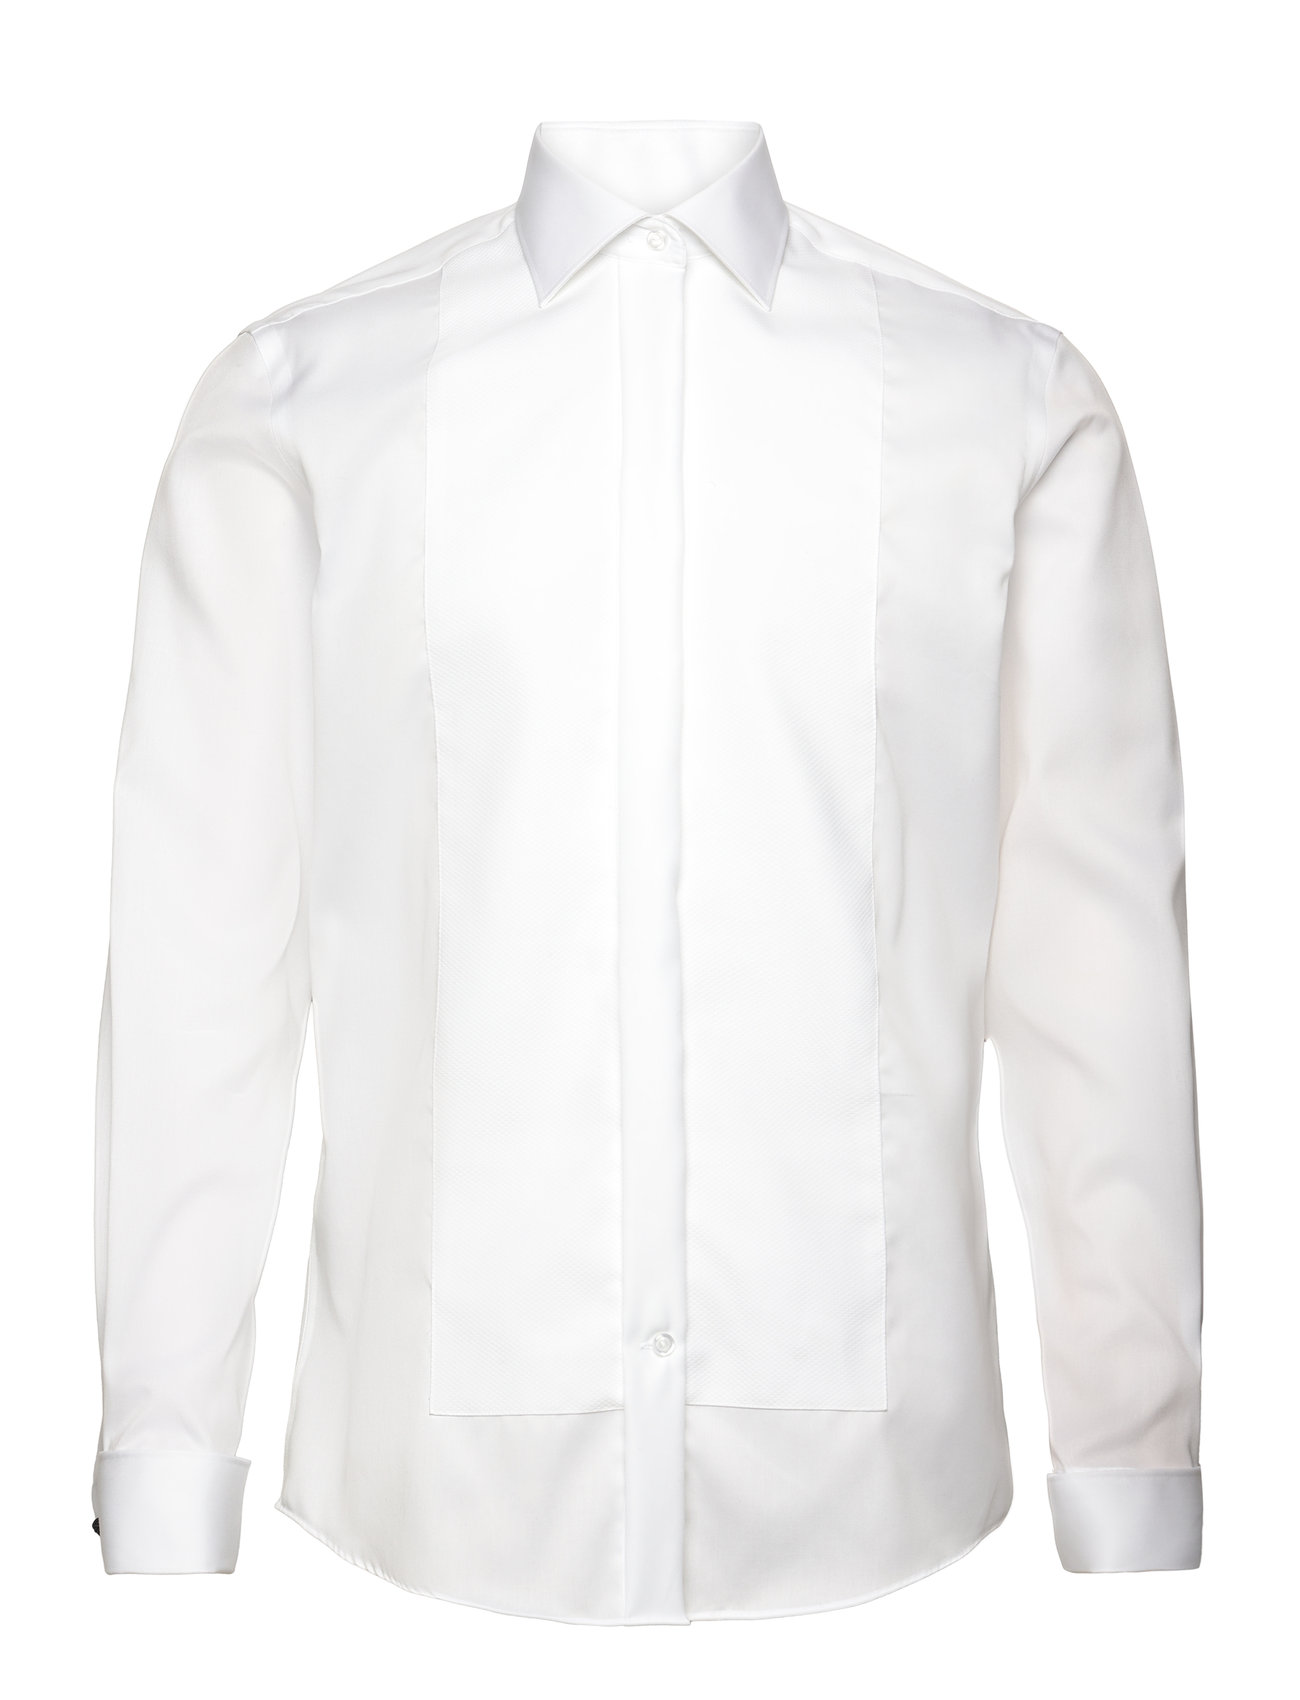 Technical :Tuxedo Modern Fit Shirt Tops Shirts Tuxedo Shirts White Lindbergh Black